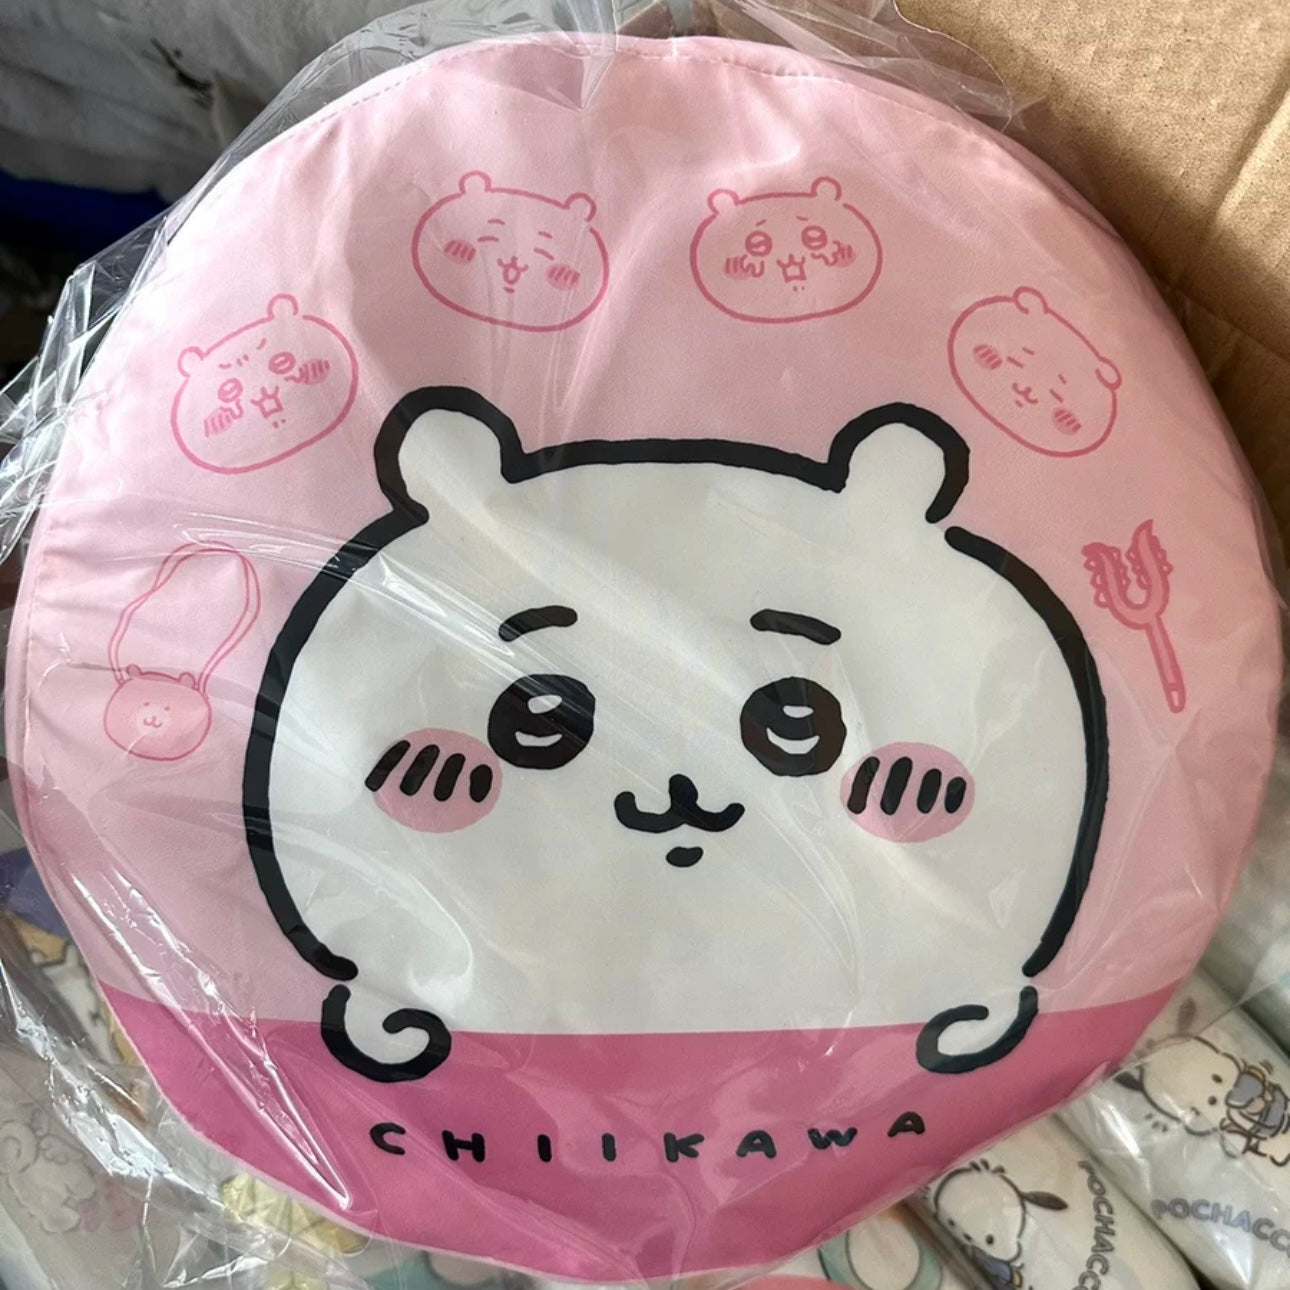 Japanese Cartoon ChiiKawa Hachiware Usagi - Soft Round Cushion Pillow Kawaii Room Decoration